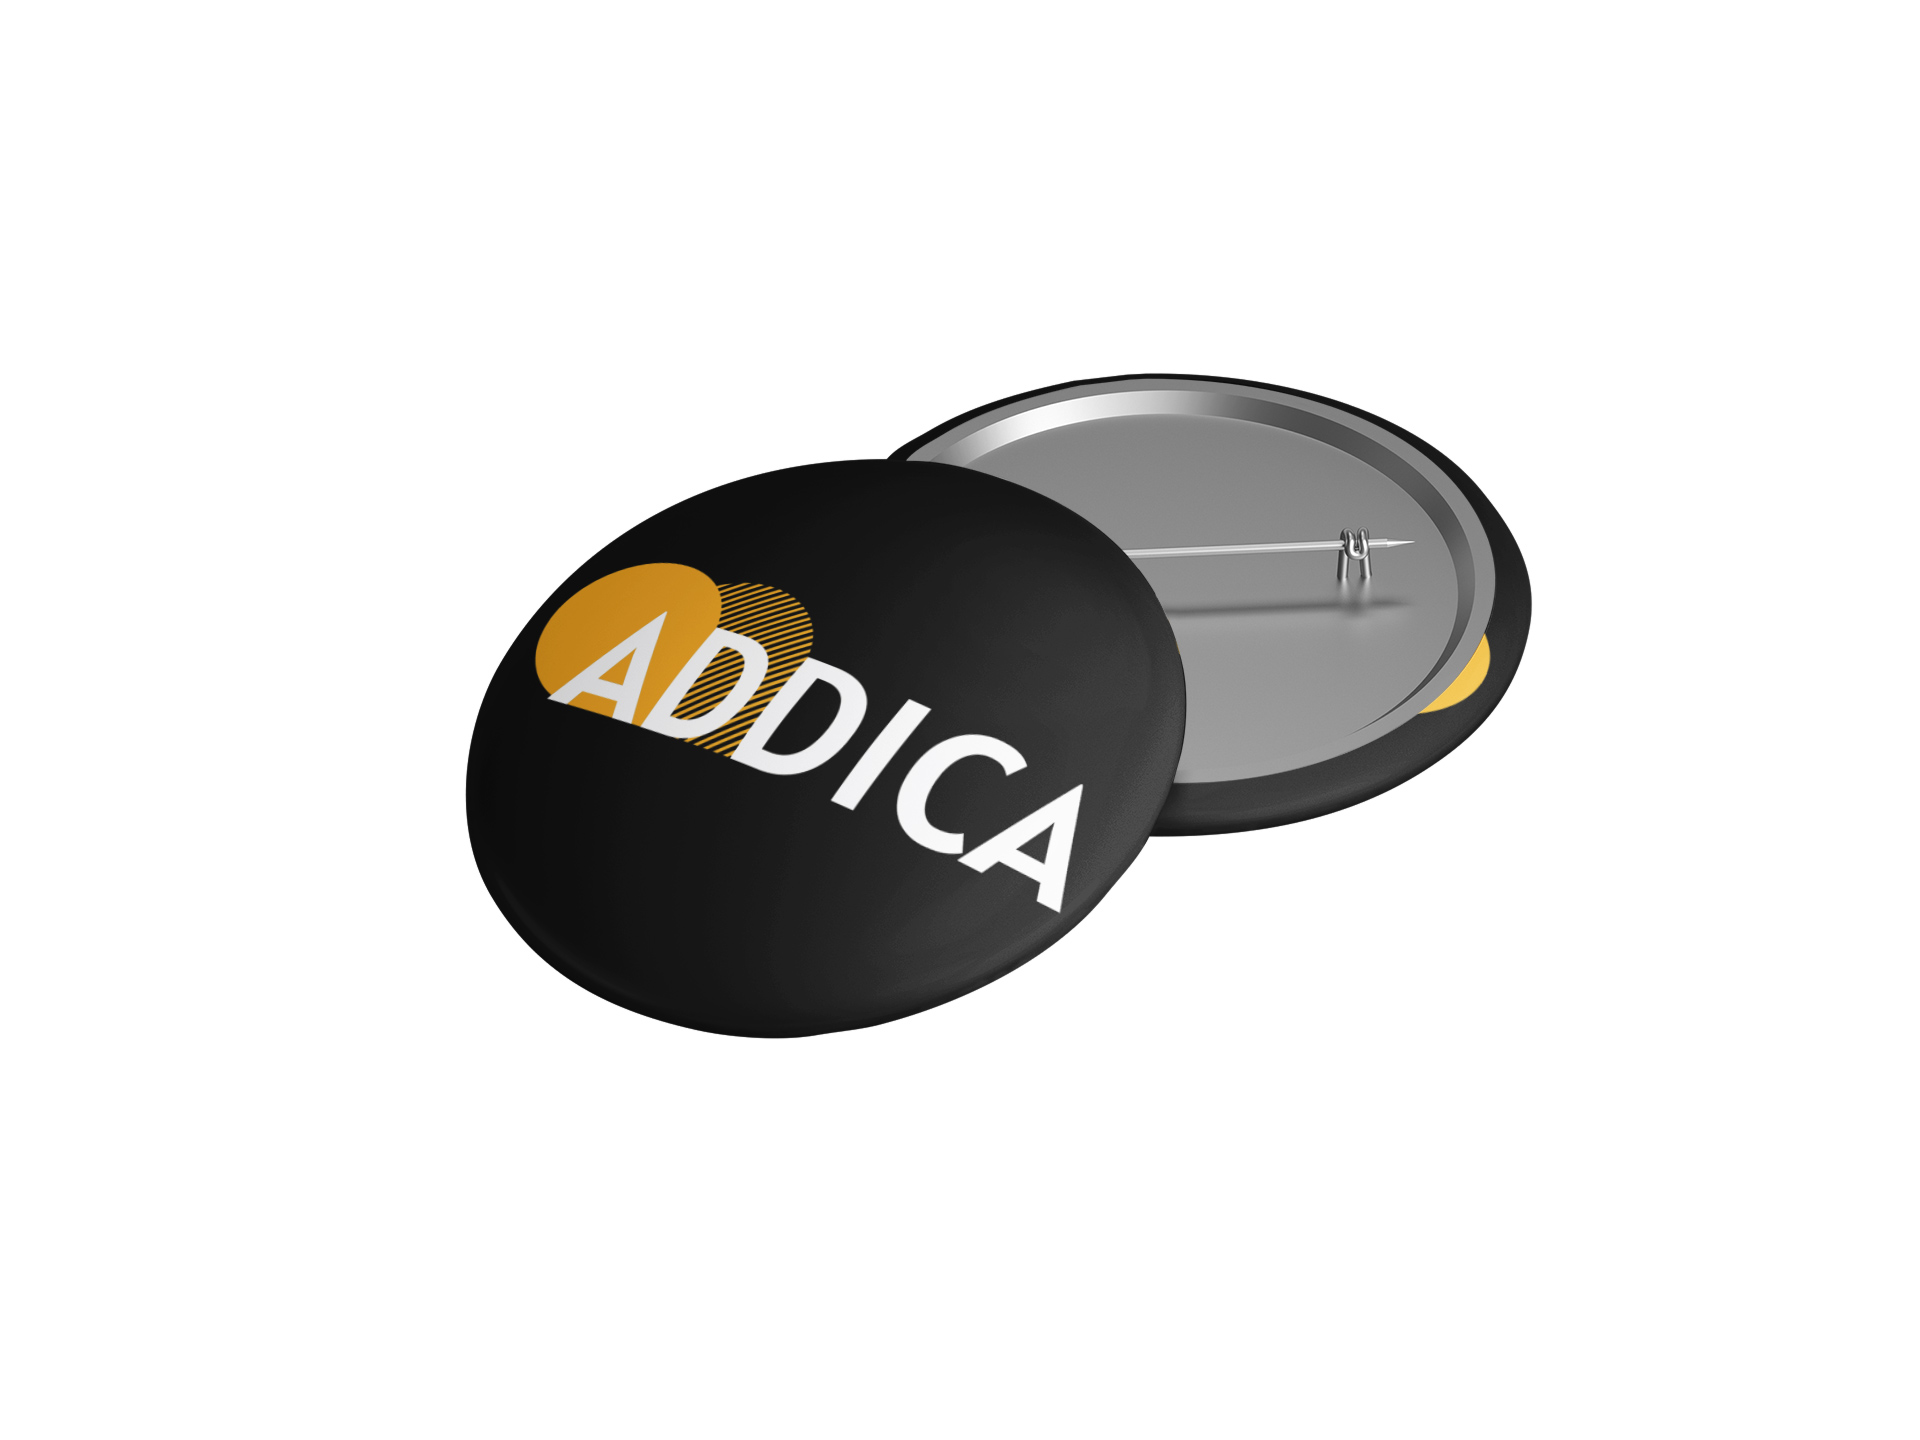 Addica Round Button Badge